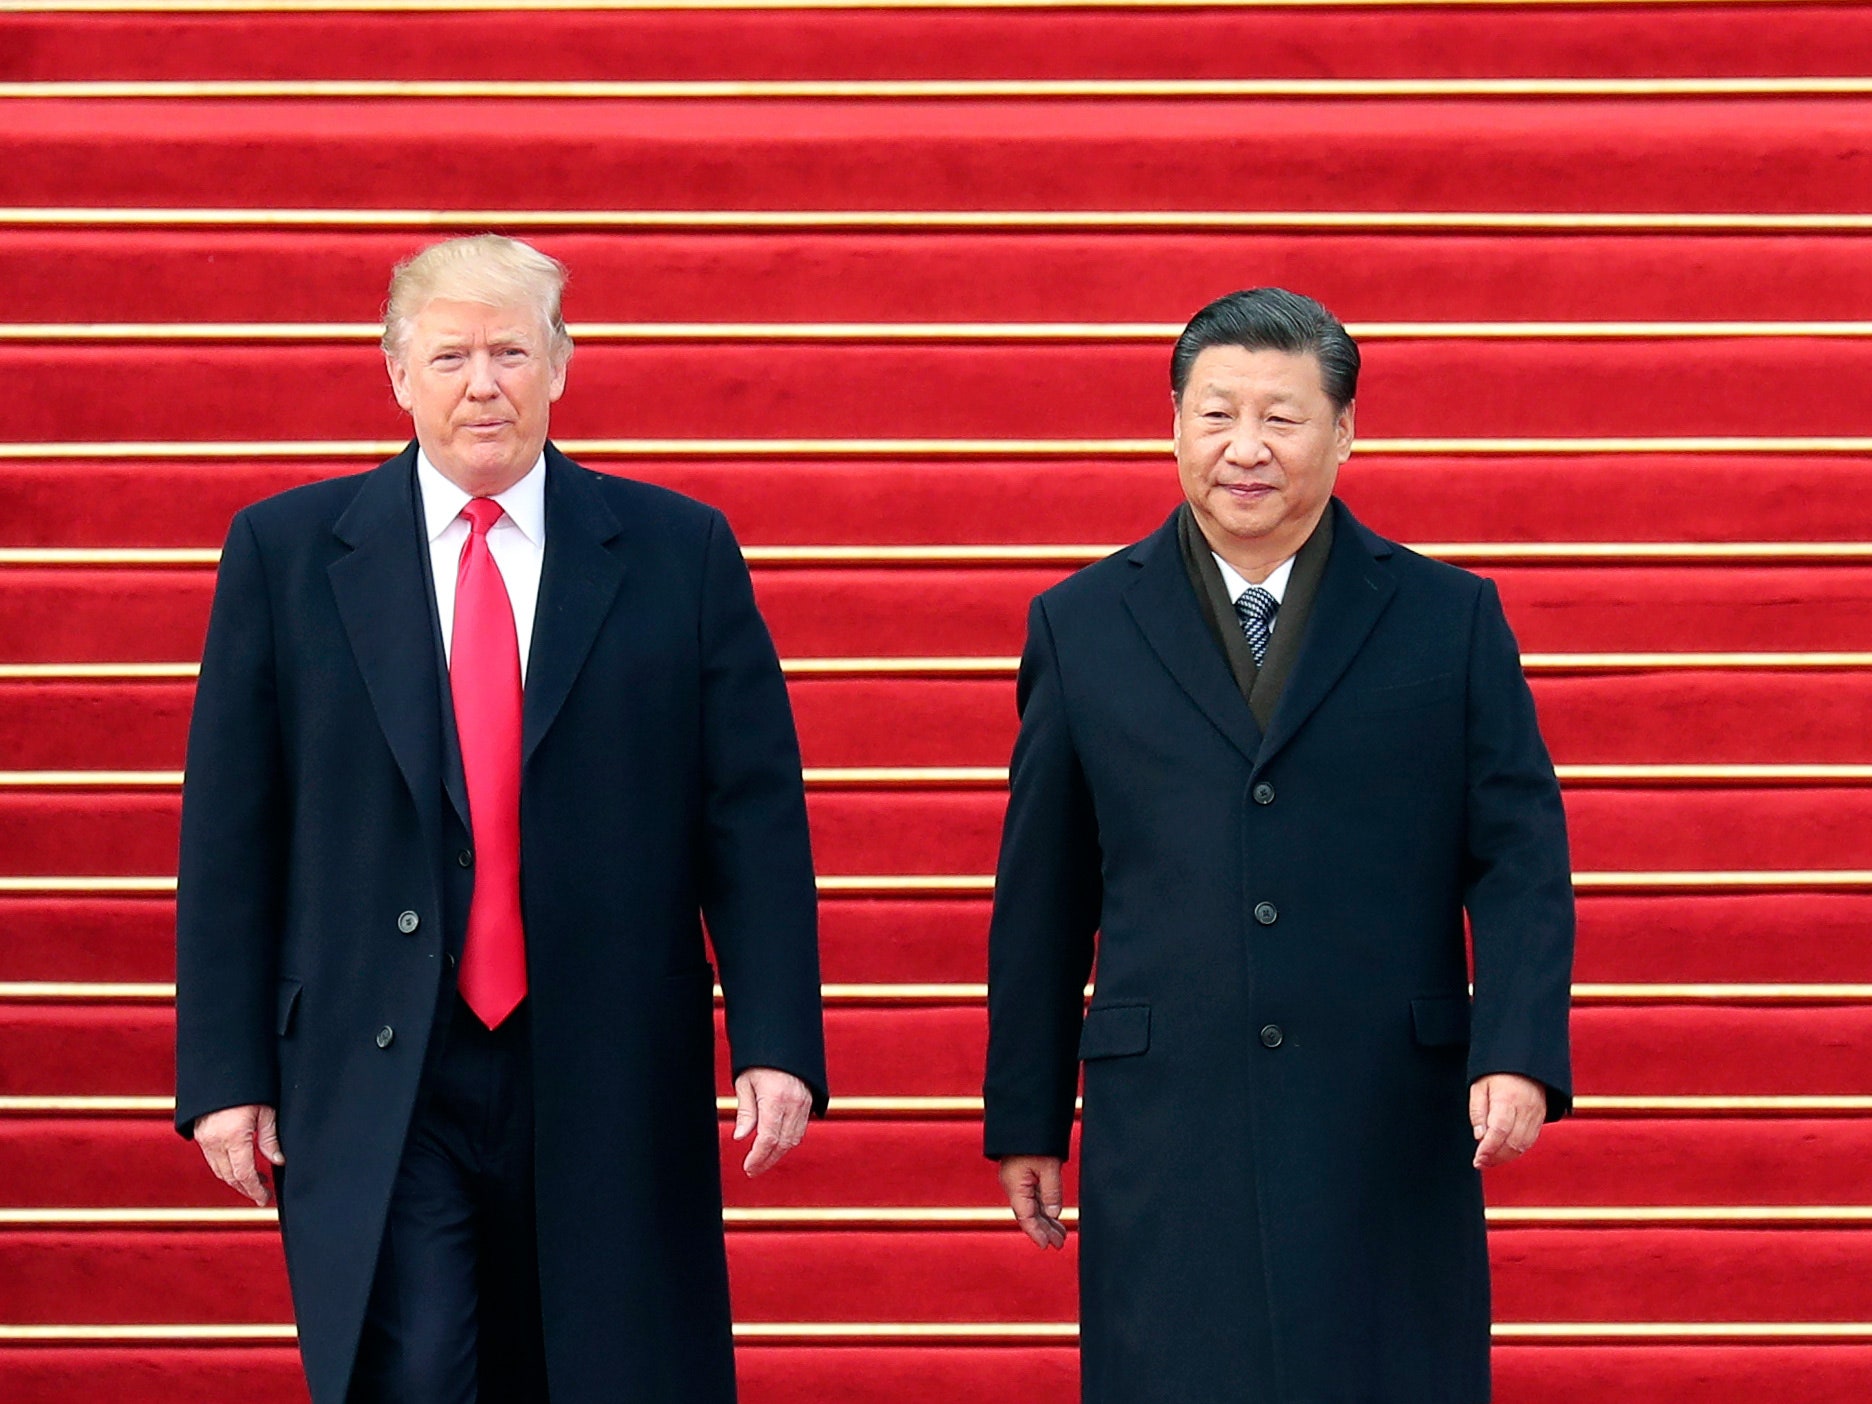 Donald Trumps warns China to answer Corona issues